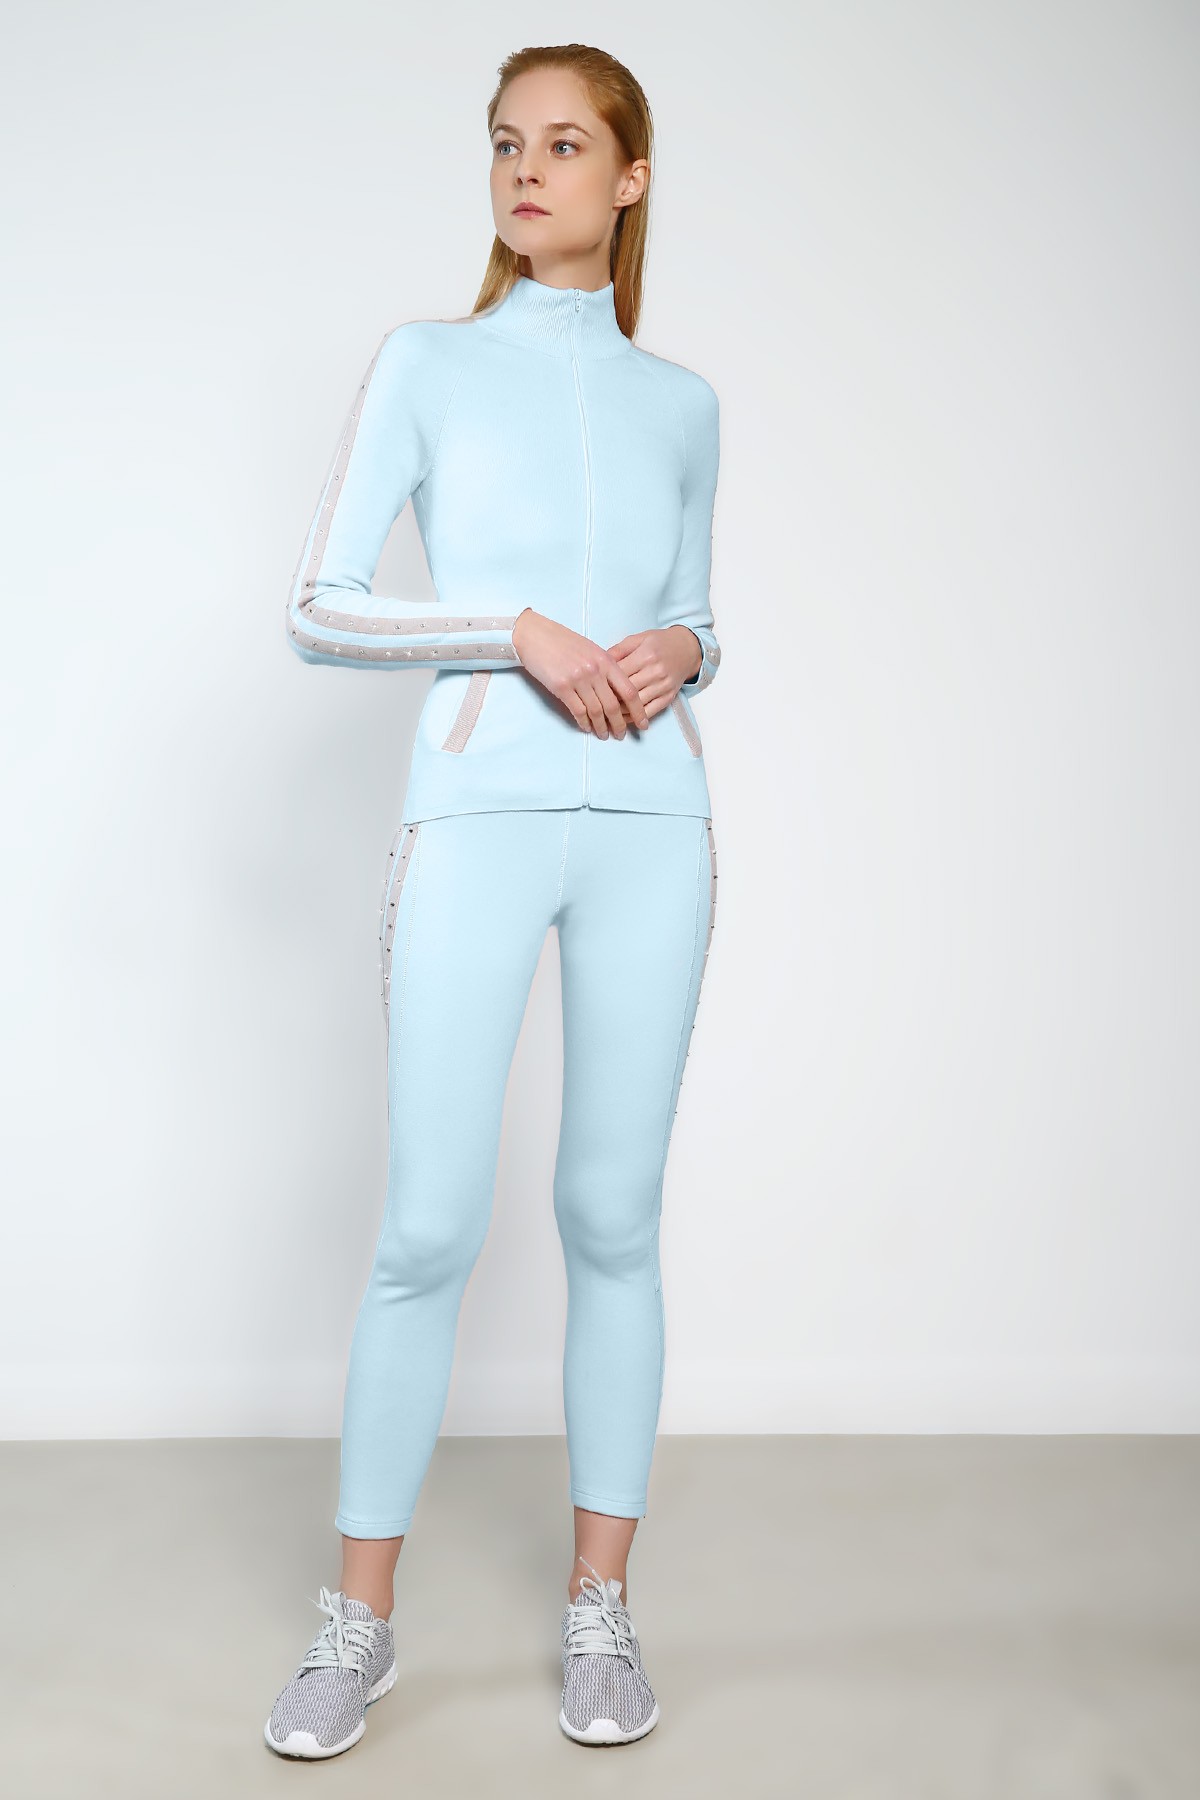 高端展现 XAMAS Deluxe 3D 滑冰员长裤 Tencel™ - 淡蓝